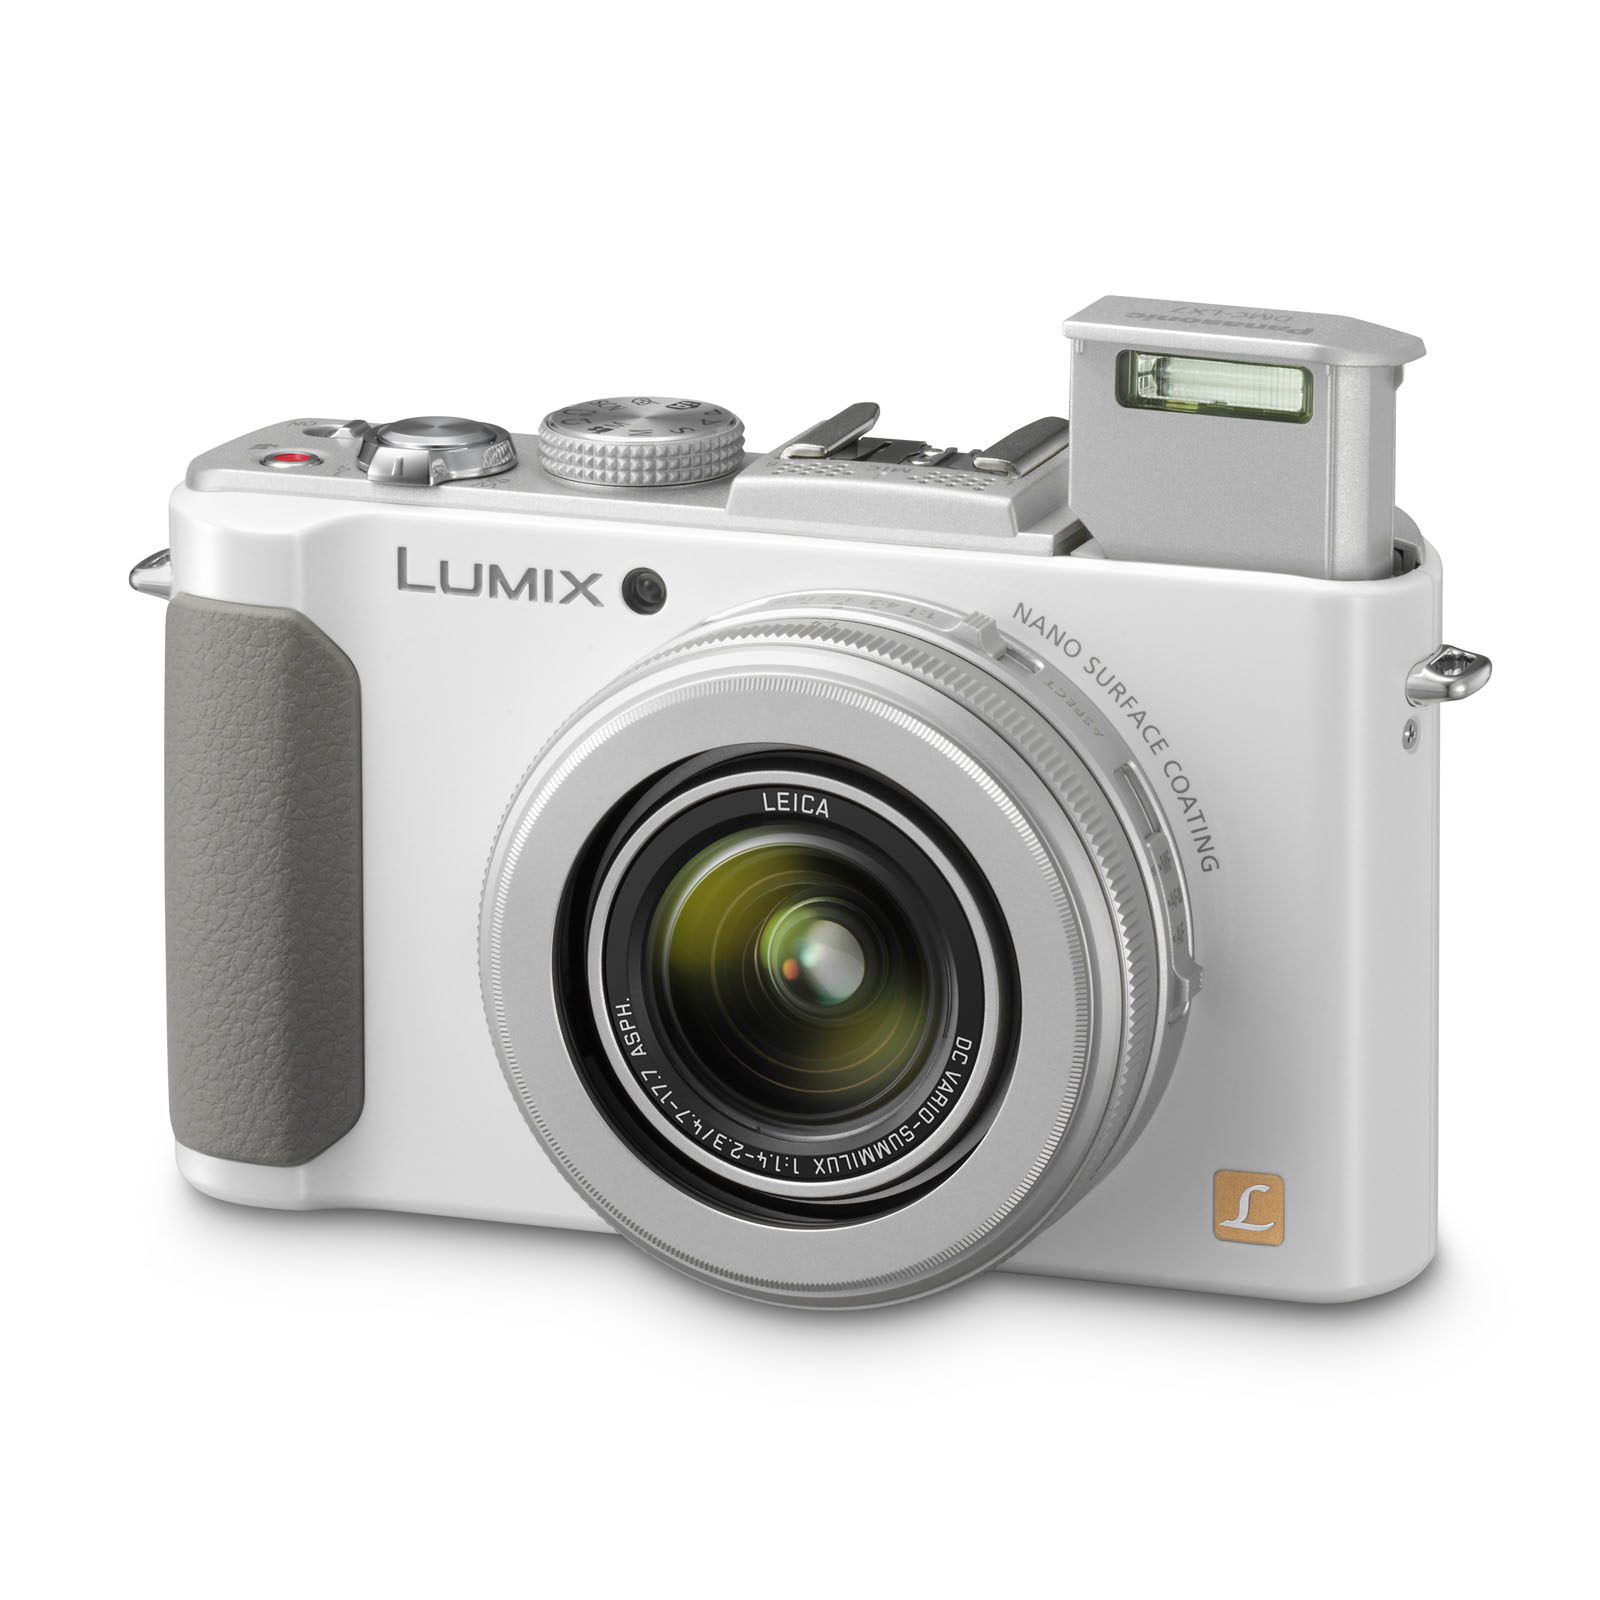 Lumix LX7 10.1MP Full HD 60P Digital Camera with Fast & Bright Leica Optics-White